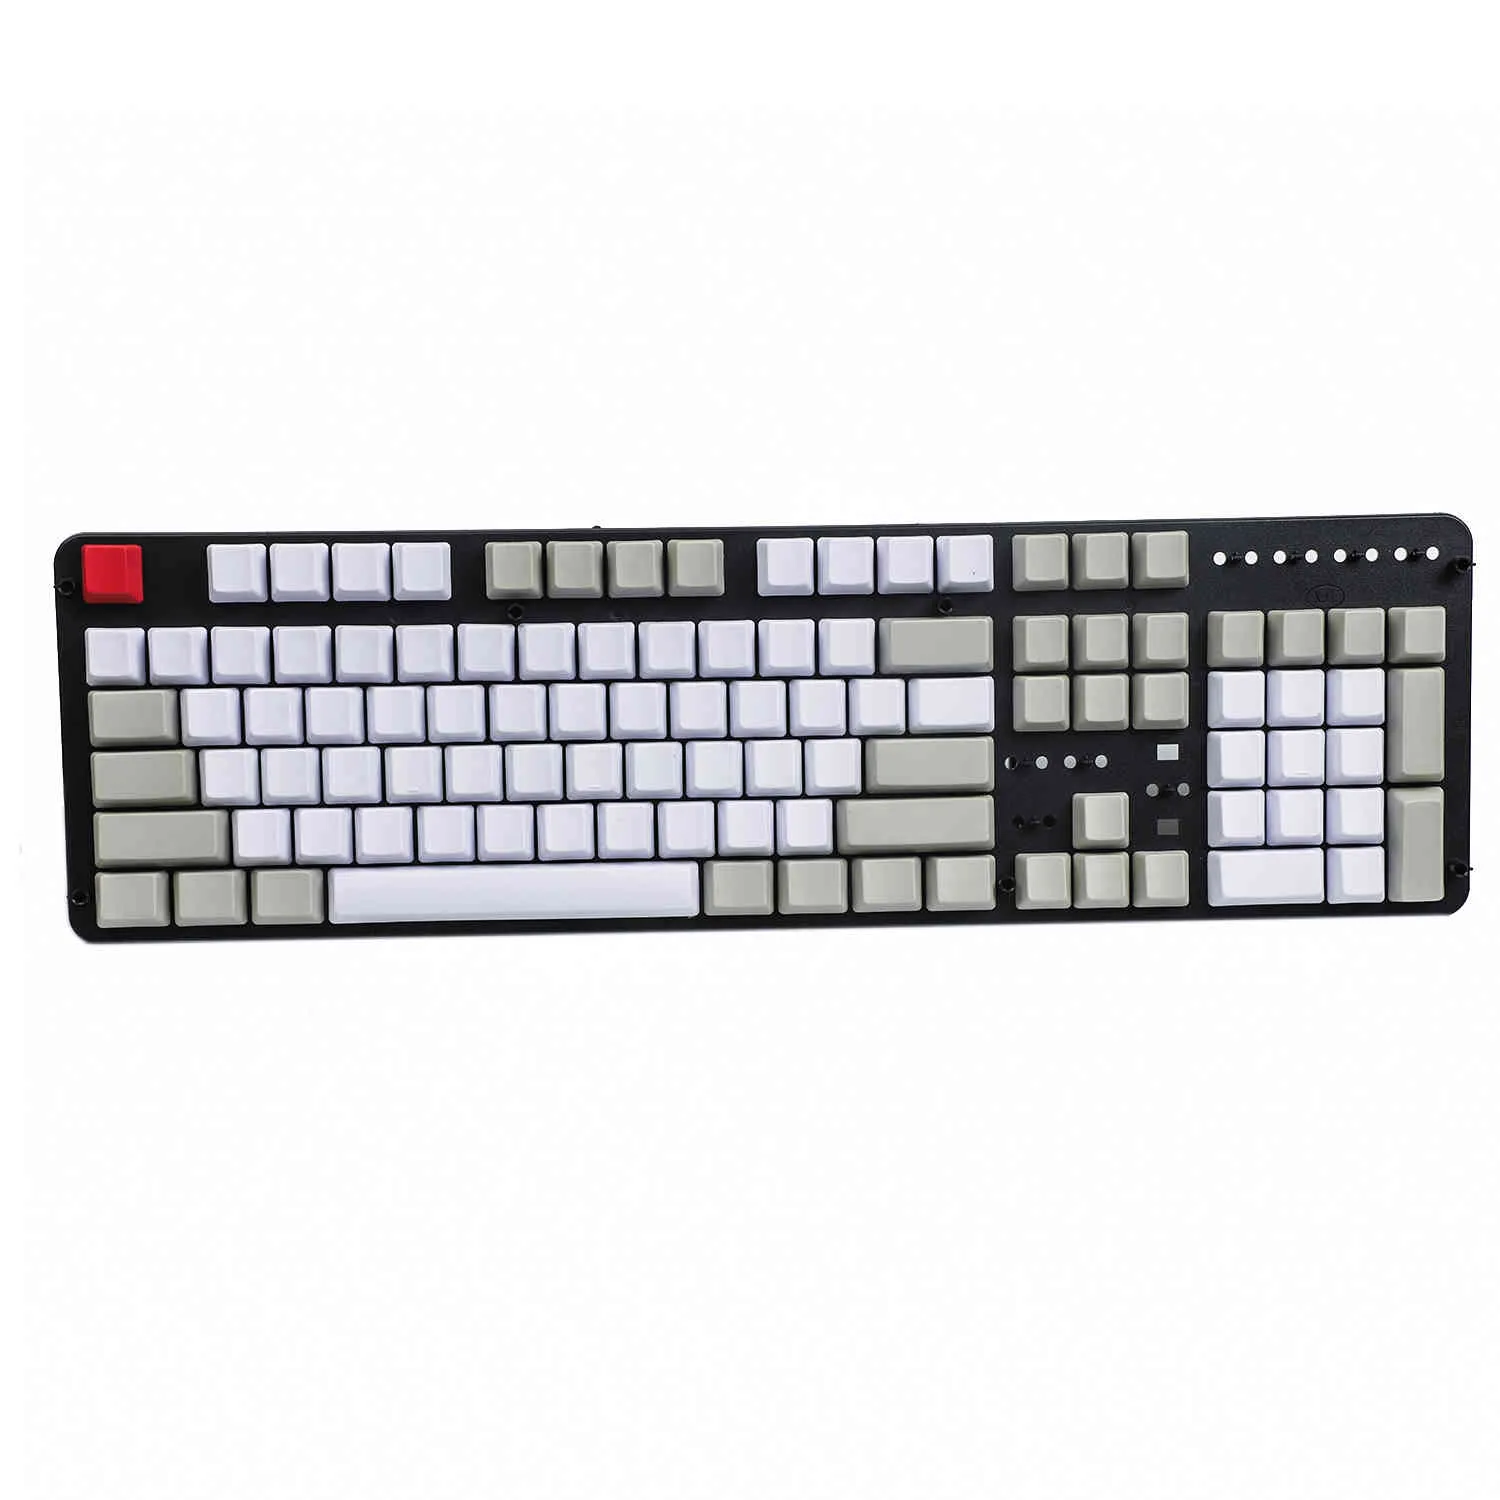 Blank 108 104 ANSI ISO-layout YMDK Tjock PBT KeyCap OEM Cherry MX Switches 61 87 108 Mekanisk Gaming Keyboard GK64X SP64